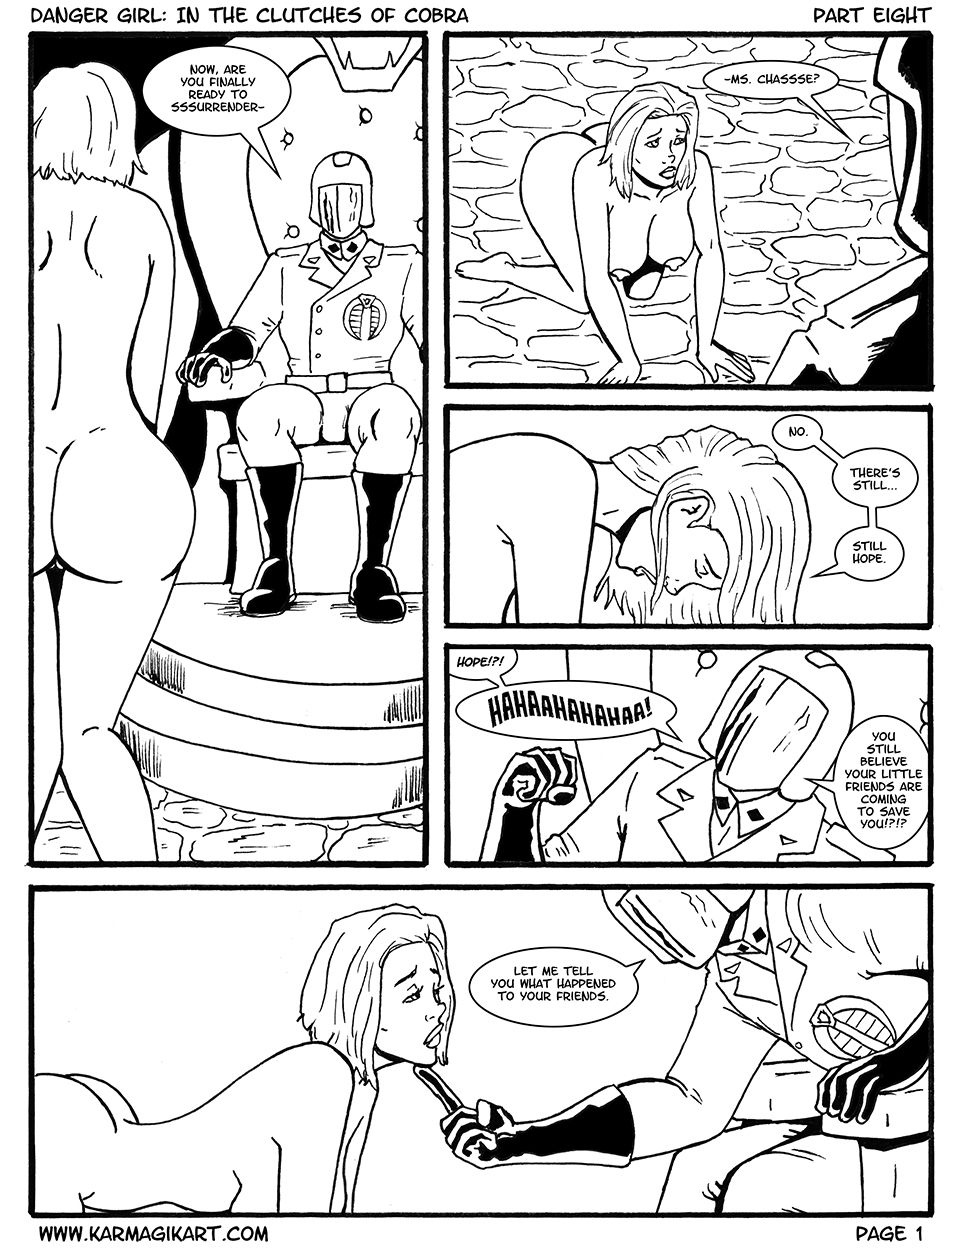 [karmagik] Danger Girl In The Clutches Of Cobra Ink [wip] Hentai Online Porn Manga And Doujinshi